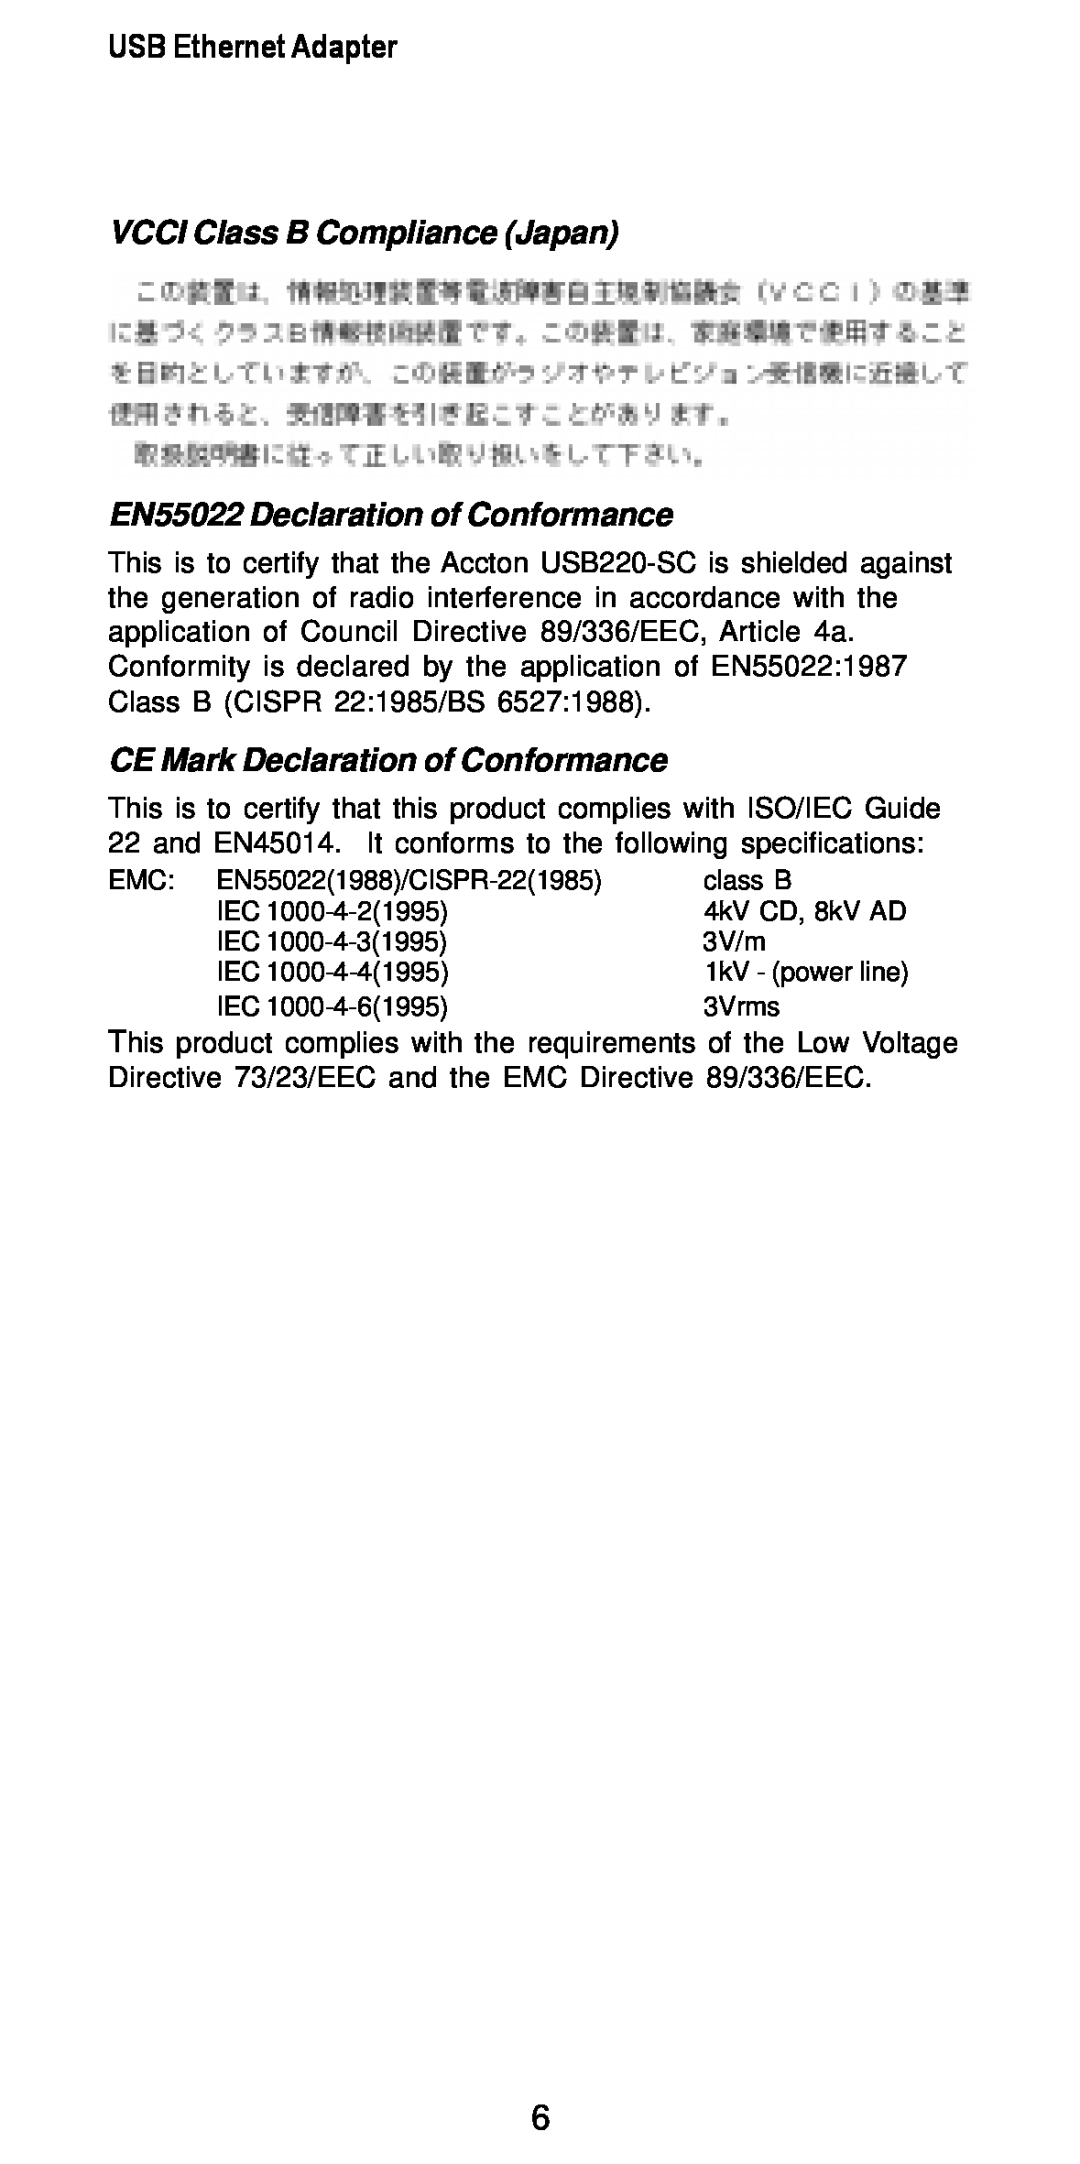 Accton Technology USB220-EC manual VCCI Class B Compliance Japan EN55022 Declaration of Conformance, USB Ethernet Adapter 